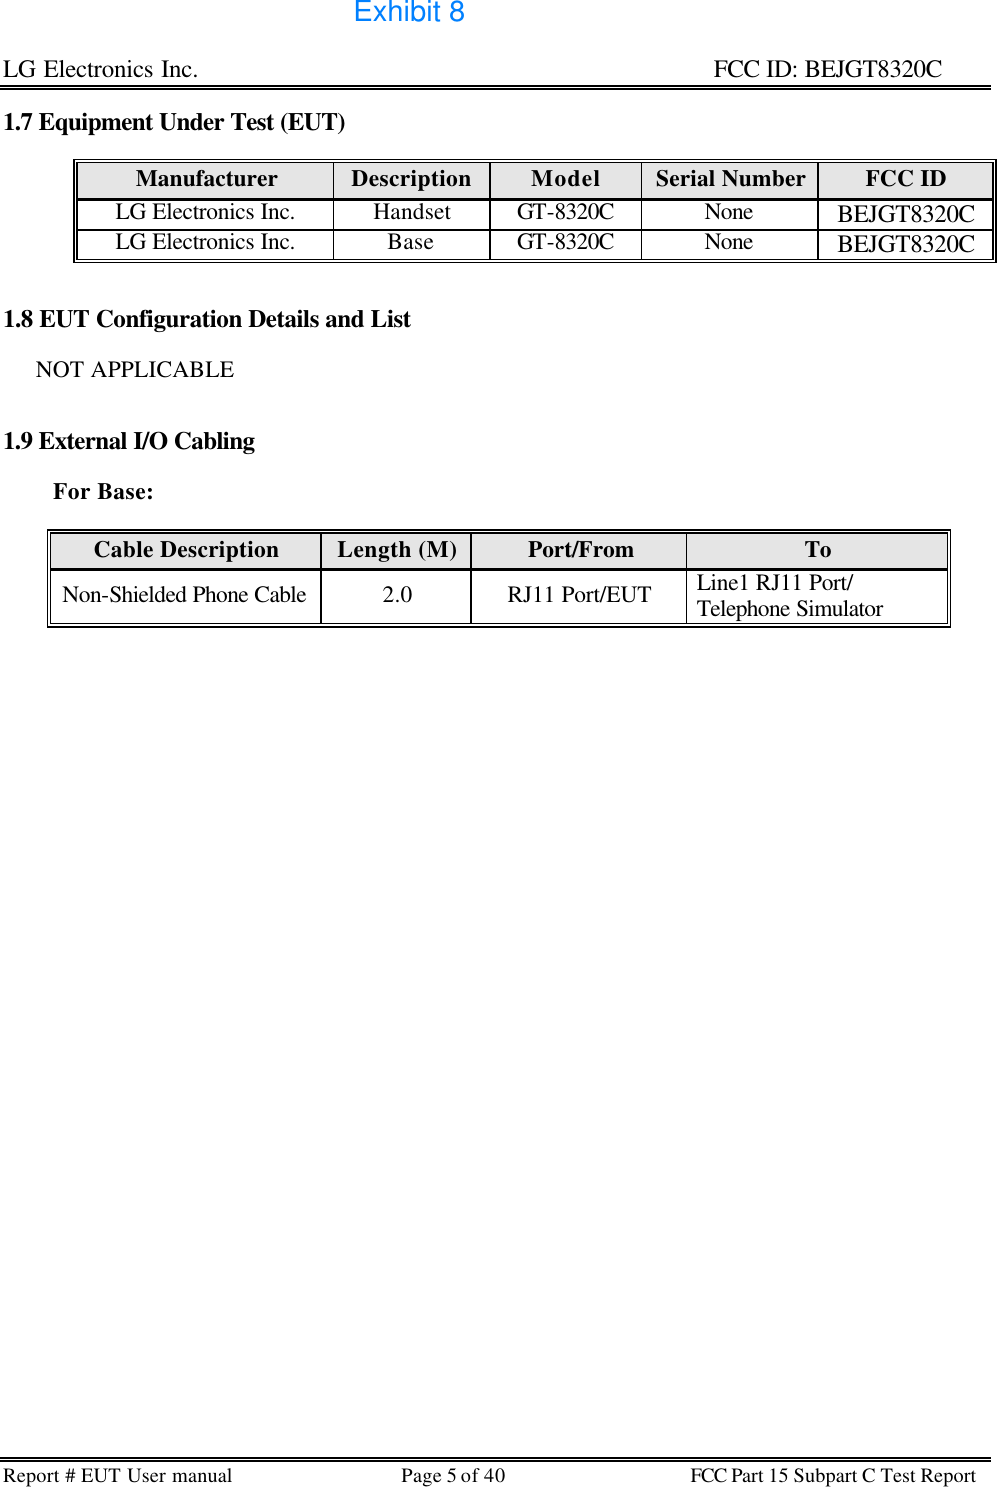 LG Electronics Inc.                                                                                                   FCC ID: BEJGT8320C Report # EUT User manual Page 5 of 40 FCC Part 15 Subpart C Test Report   1.7 Equipment Under Test (EUT)  Manufacturer Description Model Serial Number FCC ID LG Electronics Inc. Handset GT-8320C None BEJGT8320C LG Electronics Inc. Base GT-8320C None BEJGT8320C   1.8 EUT Configuration Details and List         NOT APPLICABLE   1.9 External I/O Cabling              For Base:   Cable Description Length (M) Port/From To Non-Shielded Phone Cable 2.0 RJ11 Port/EUT Line1 RJ11 Port/ Telephone Simulator    Exhibit 8